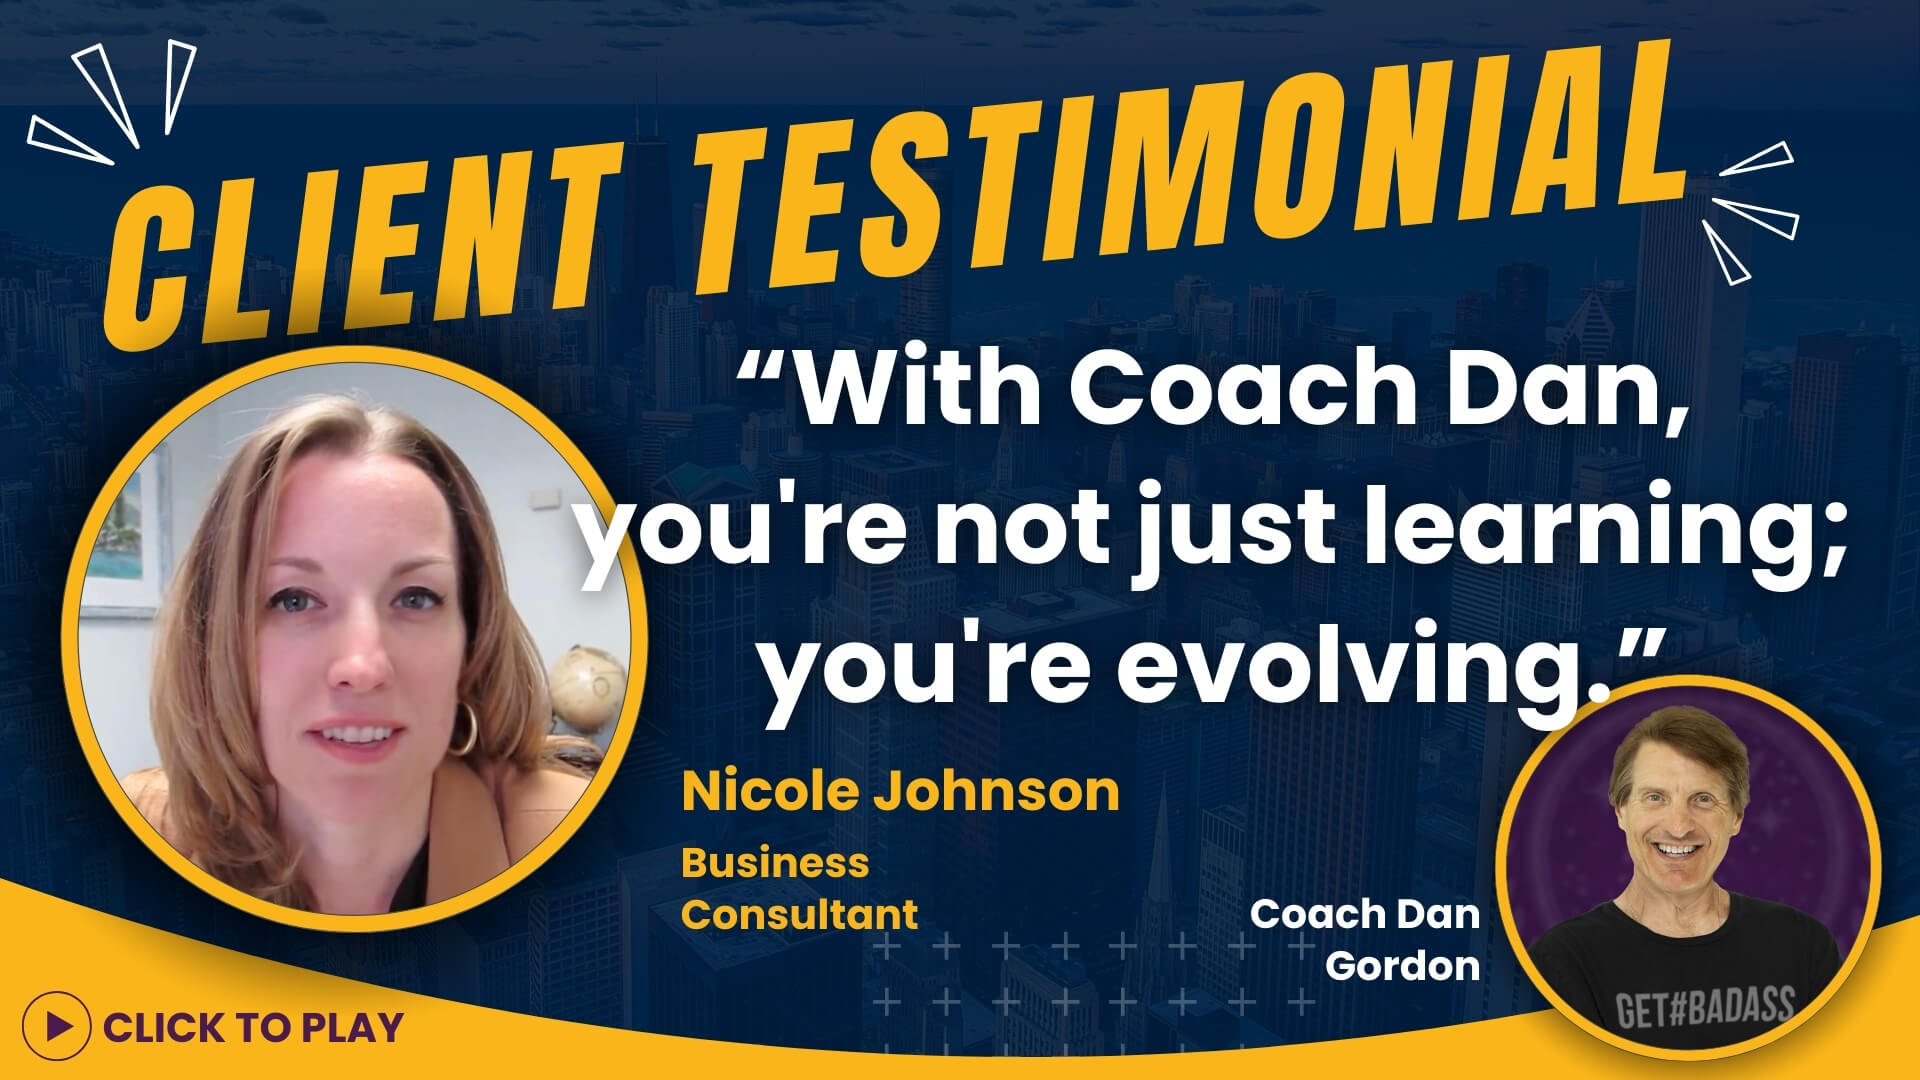 Business Consultant Nicole Johnson endorses Coach Dan Gordon, highlighting the evolutionary nature of his coaching.